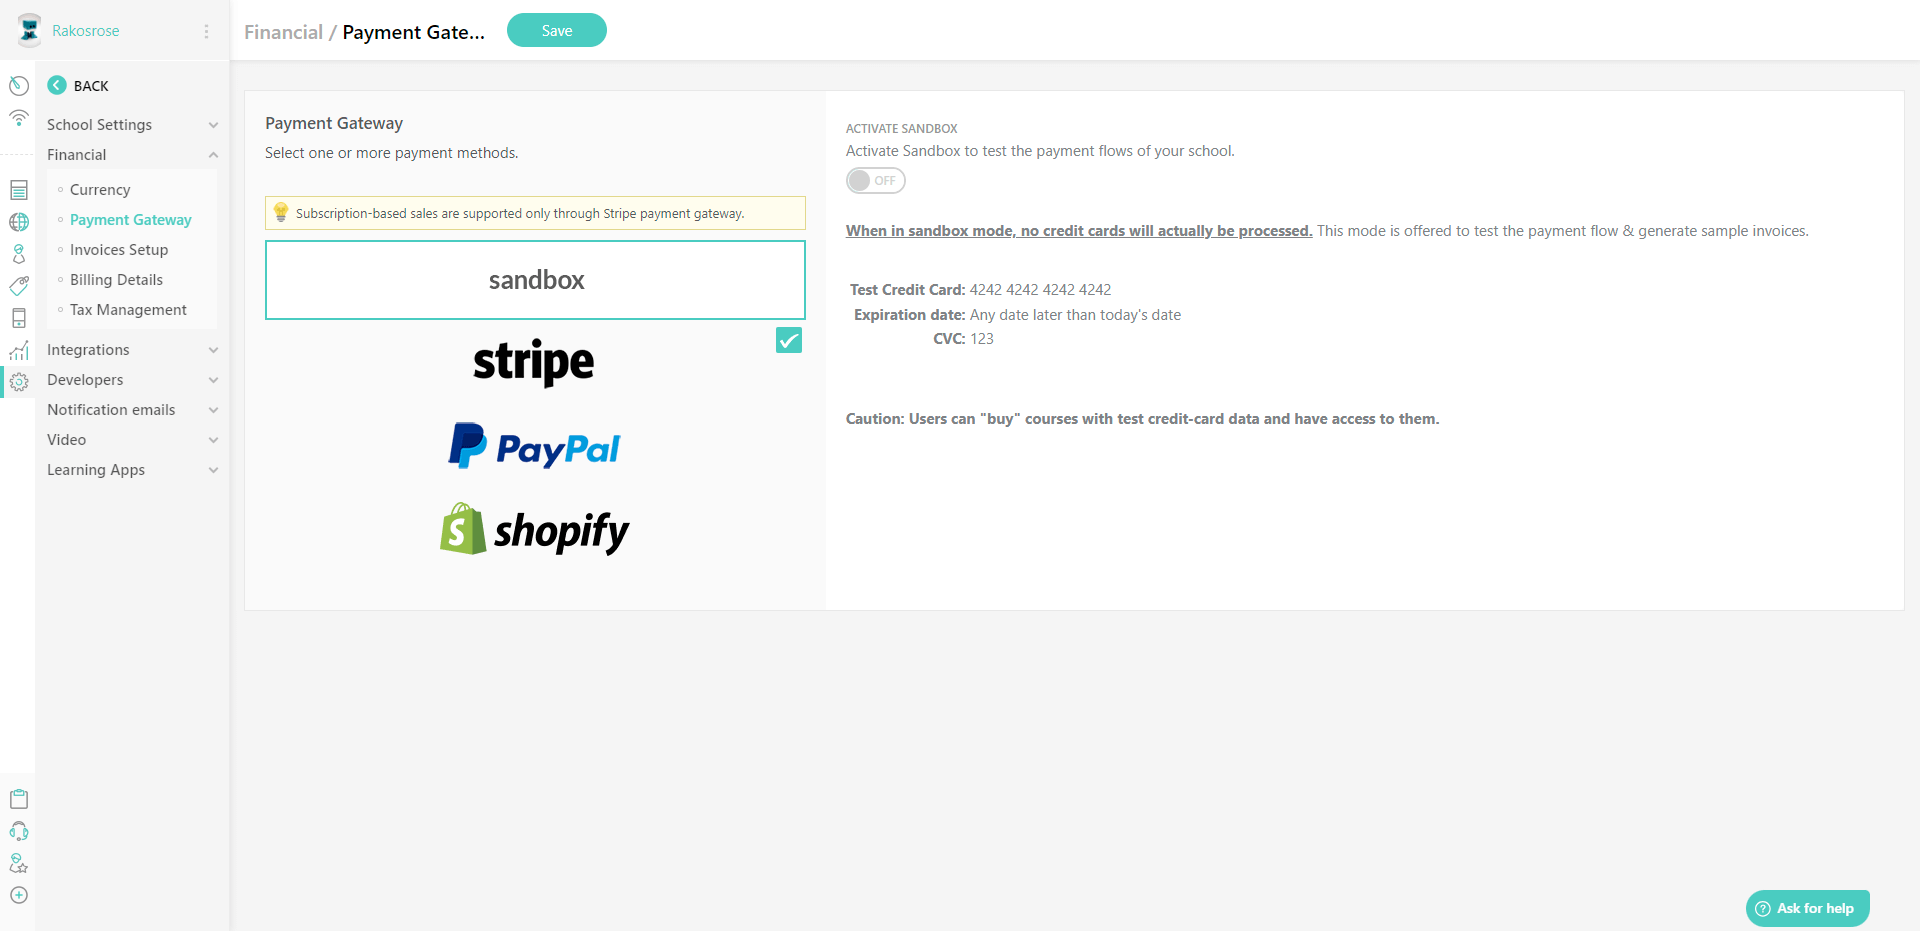 LearnWorlds payment gatewasy dashboard screenshot